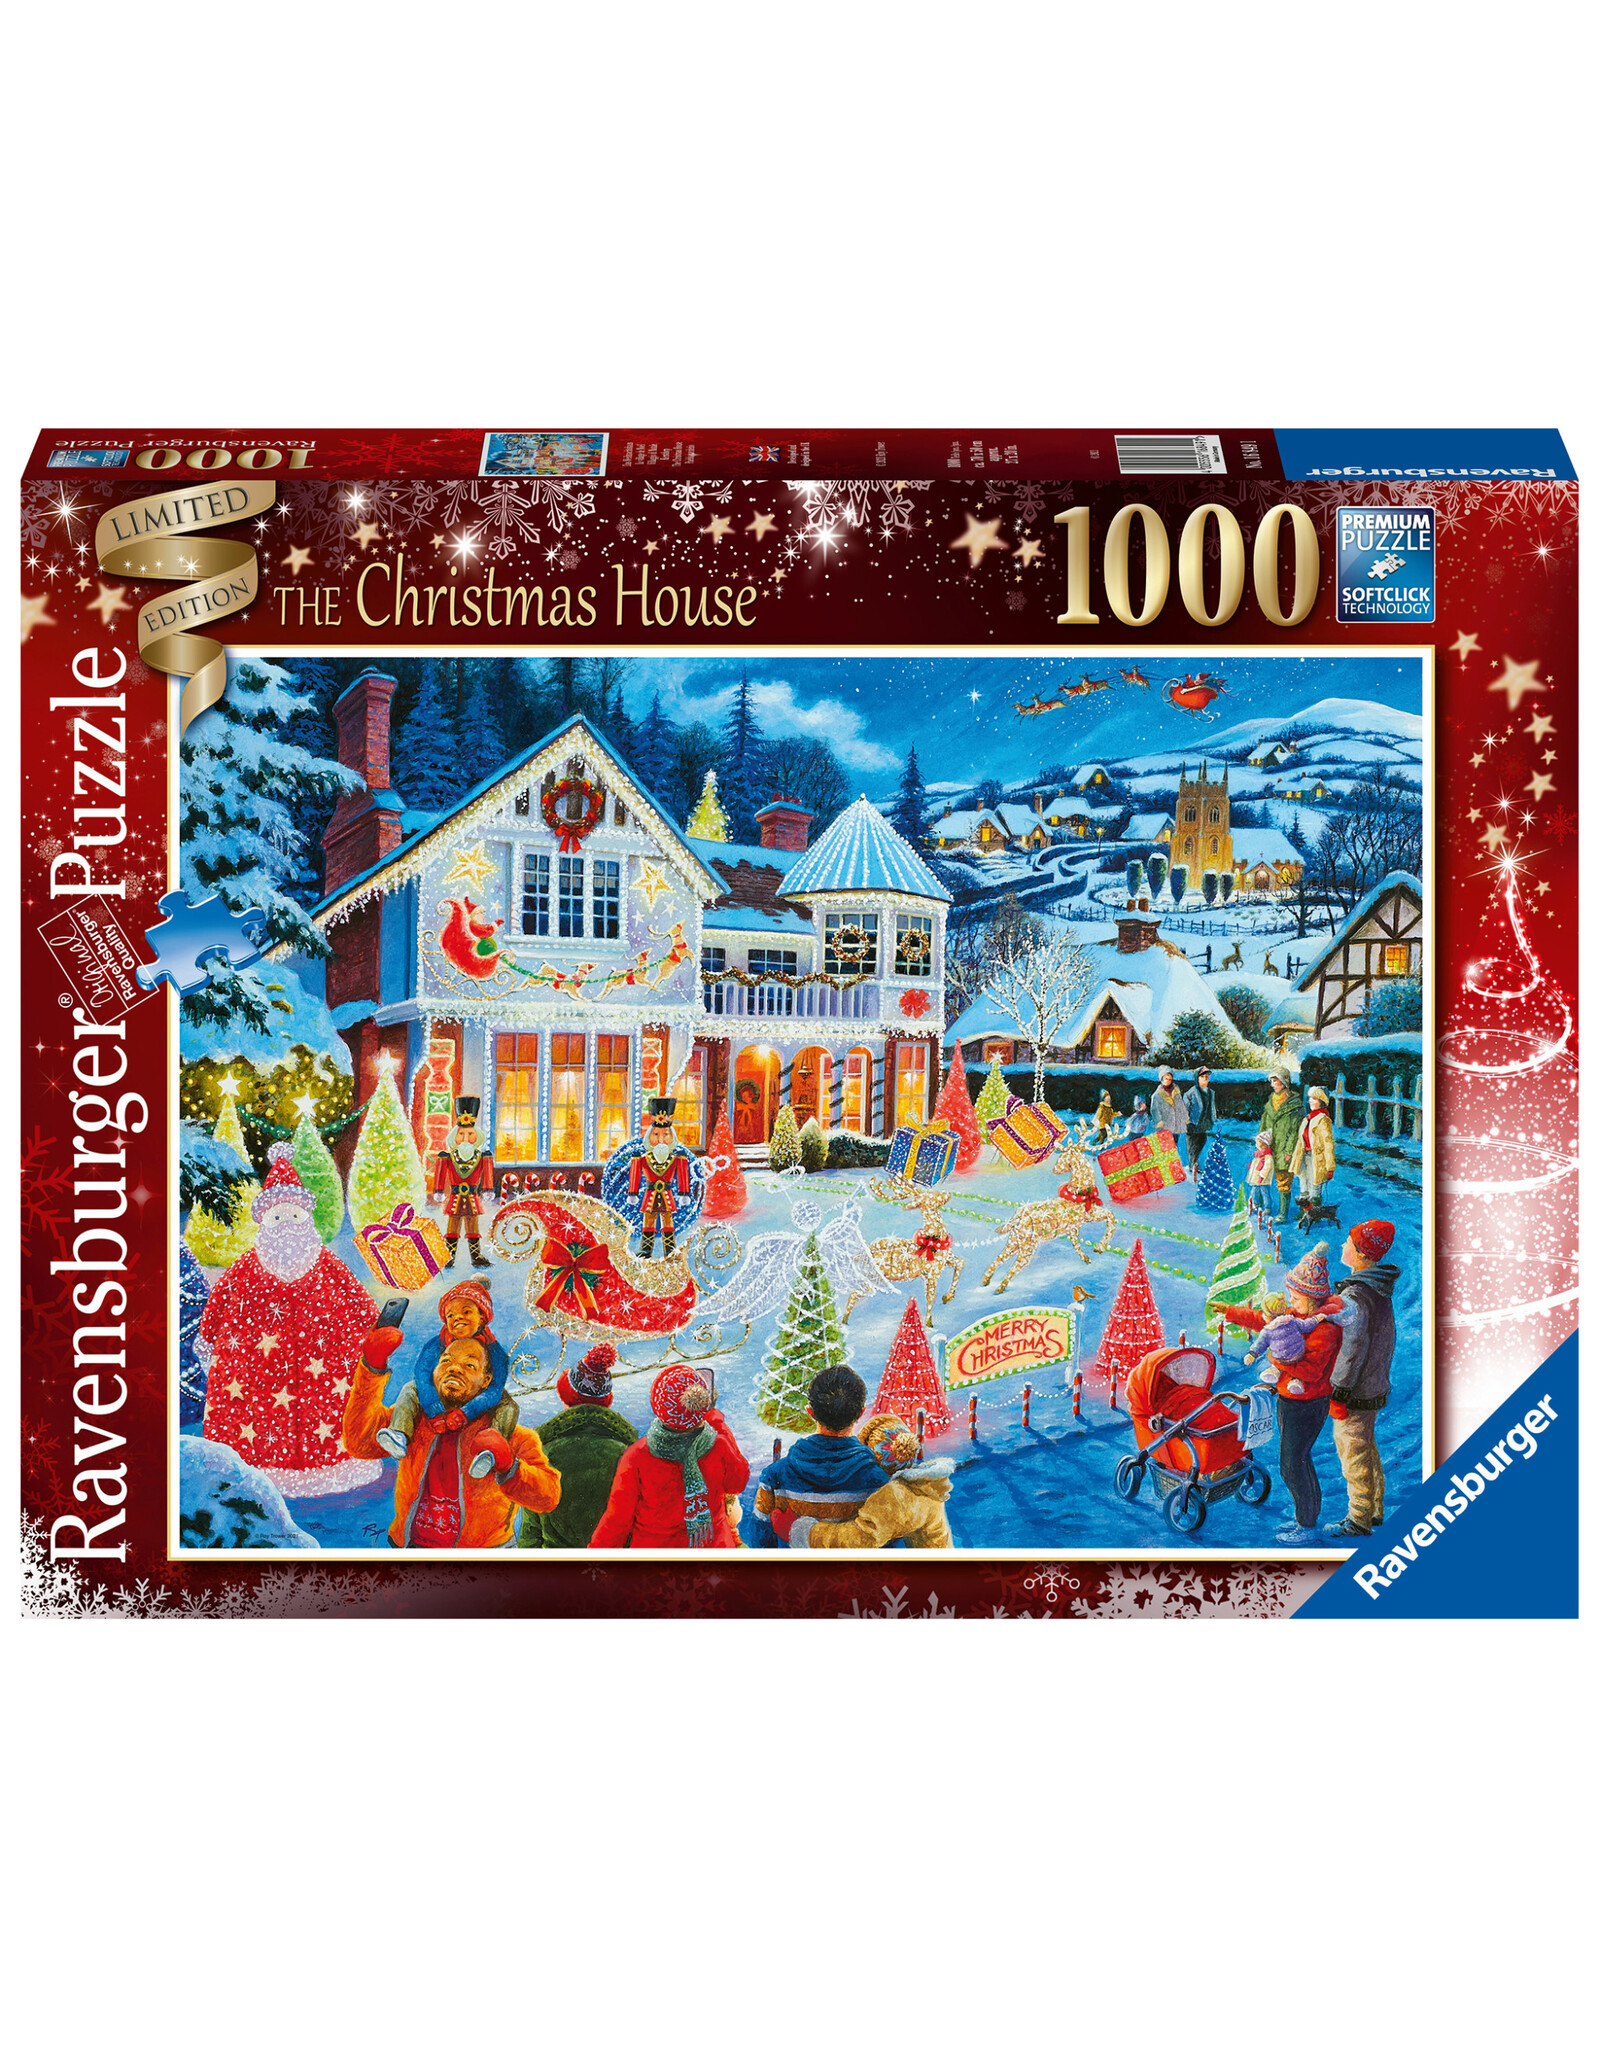 The Christmas House Seasonal 1000 pc Puzzle